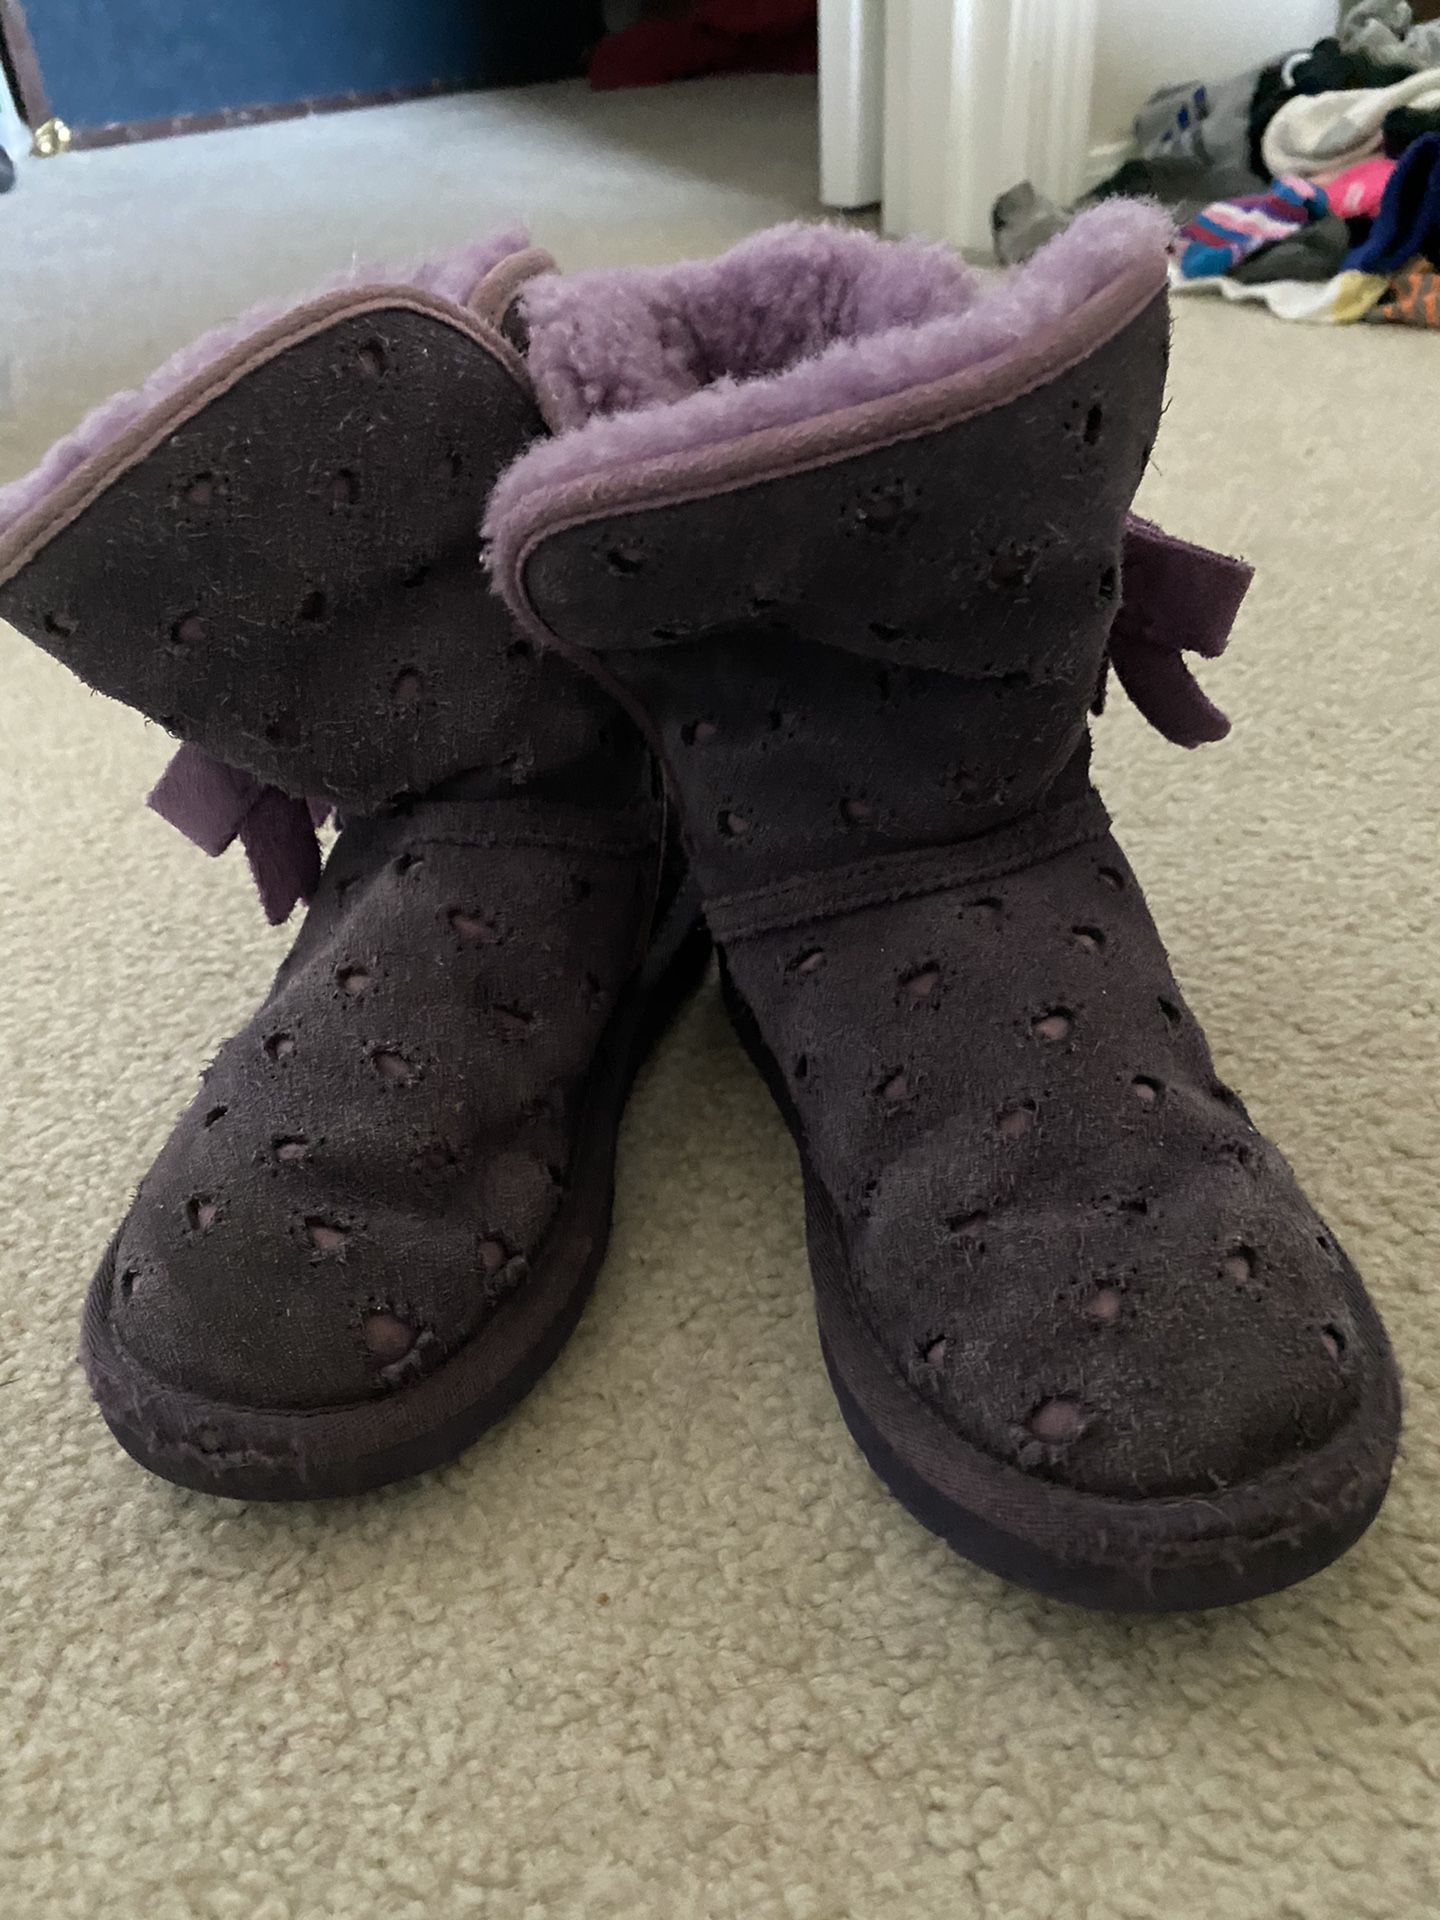 Ugg purple little girls size 12 boots. Like new